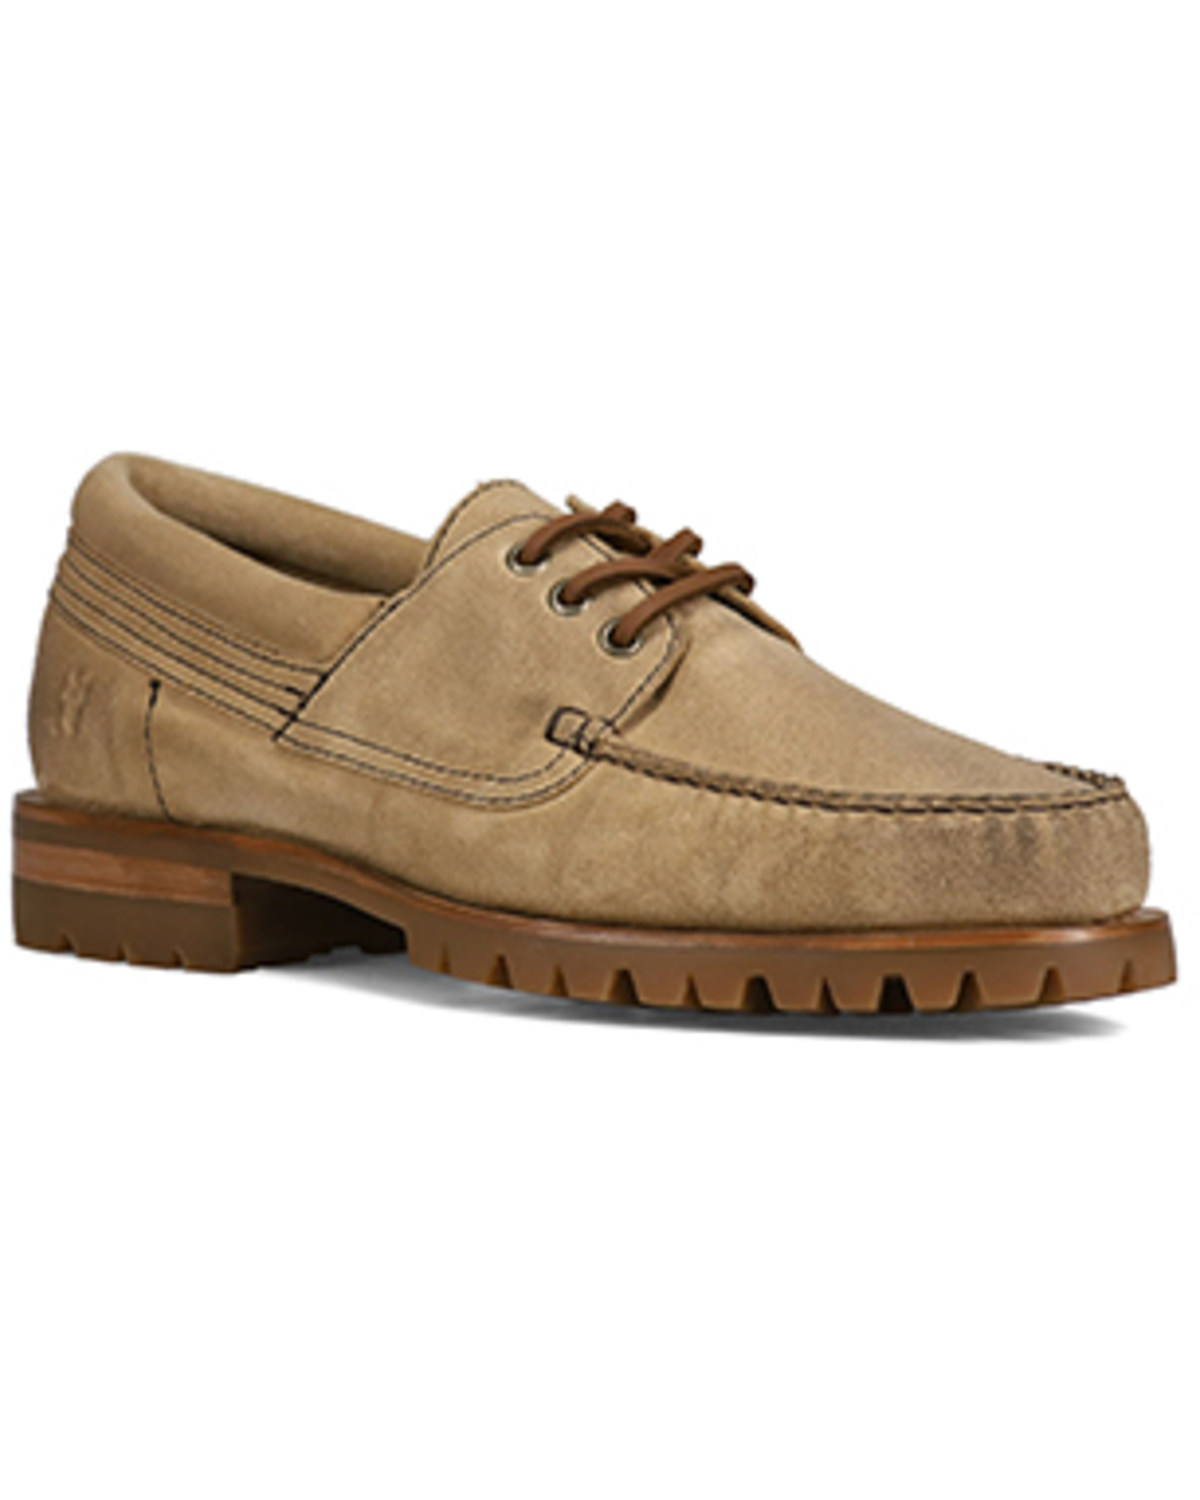 Frye Men's Hudson Camp Casual Shoes - Moc Toe